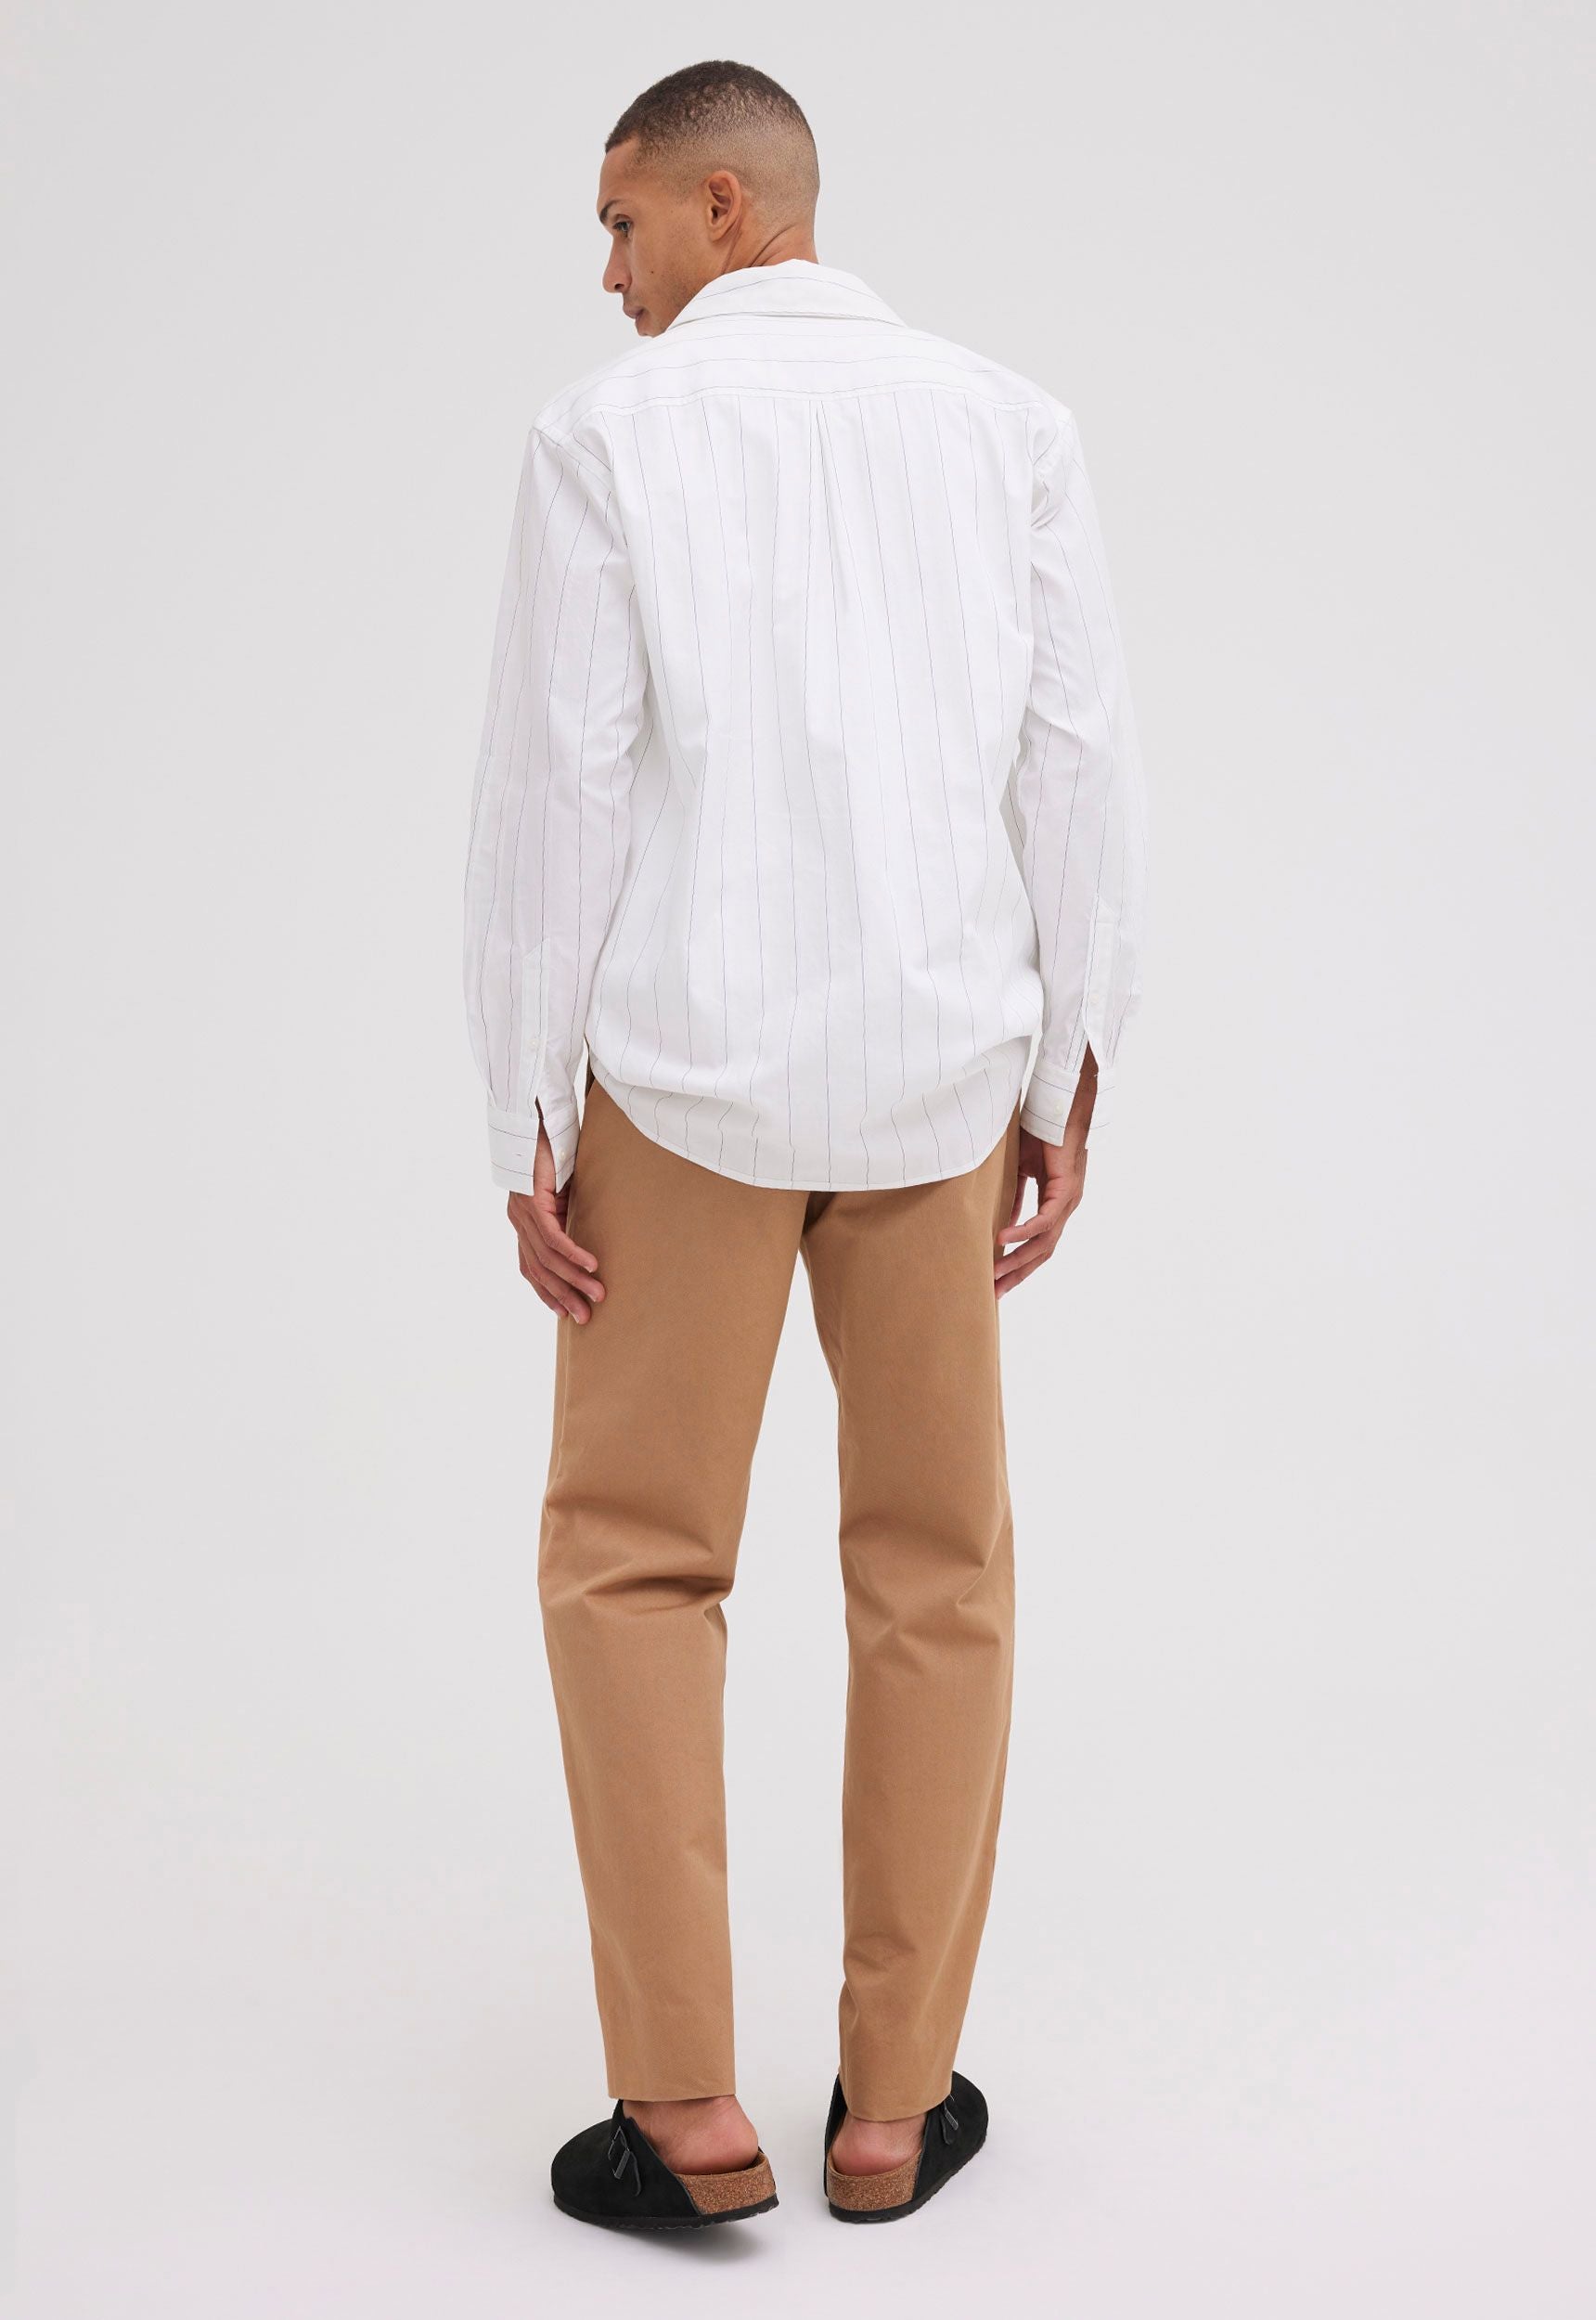 Jac+Jack | Doran Shirt - White/Navy Stripe